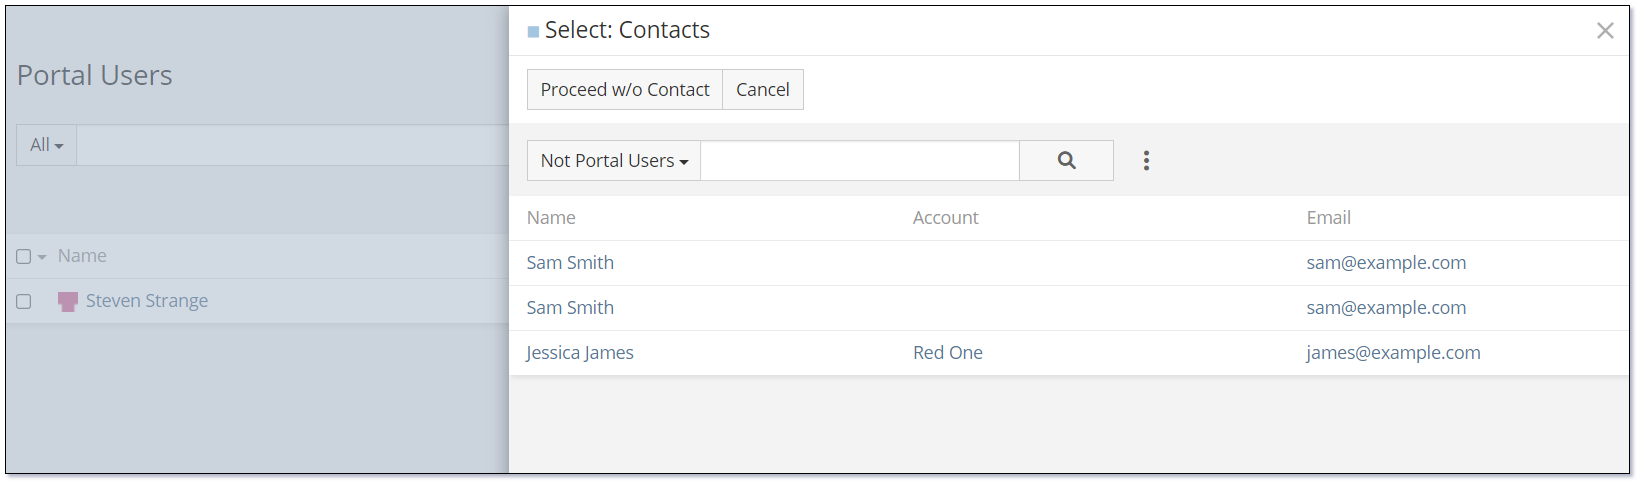 Portal User Select Contact